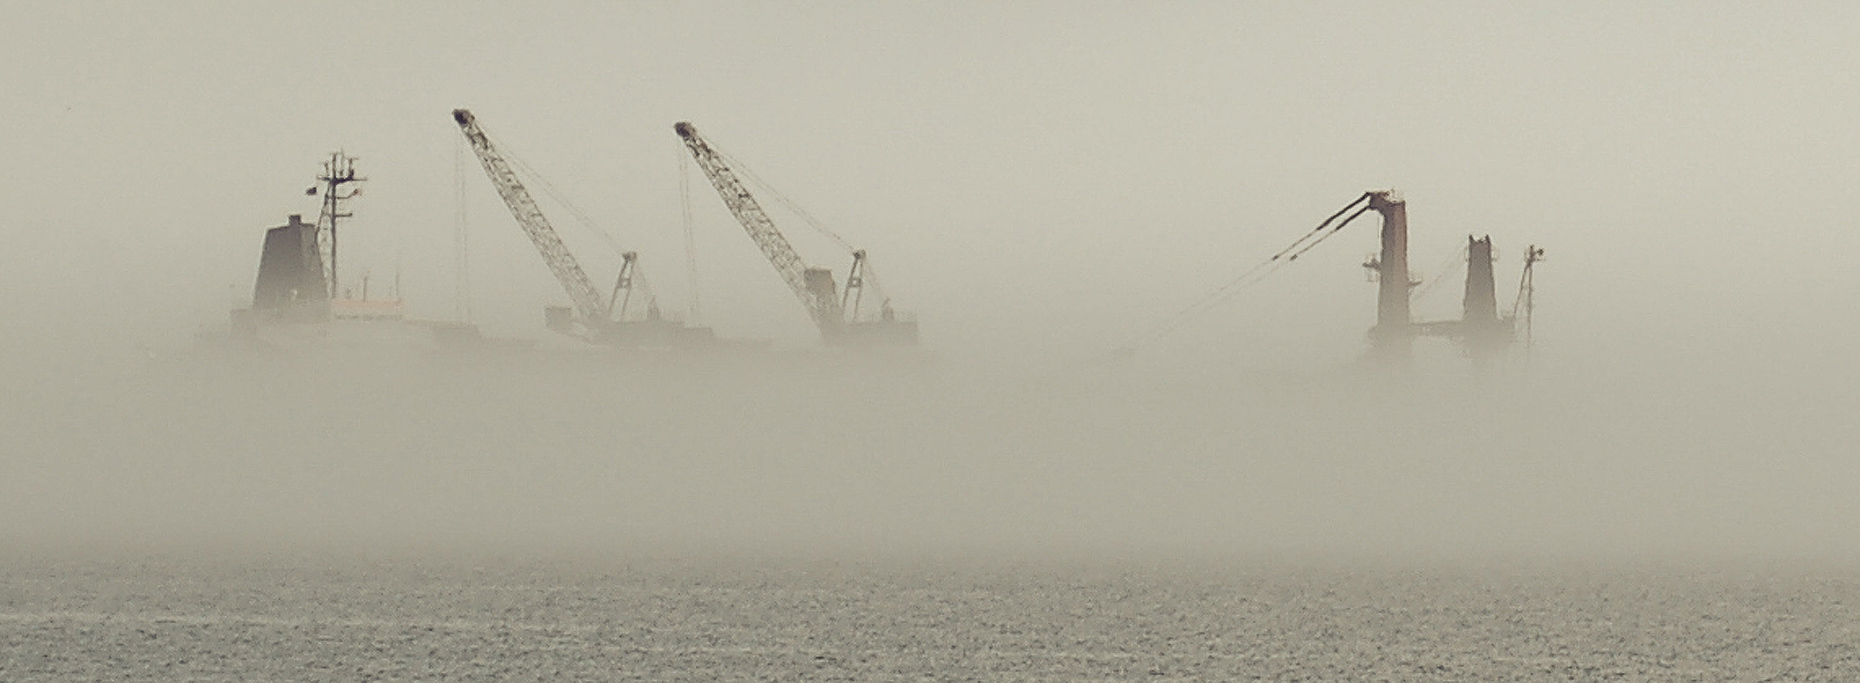 018-foggy-freighterWeb